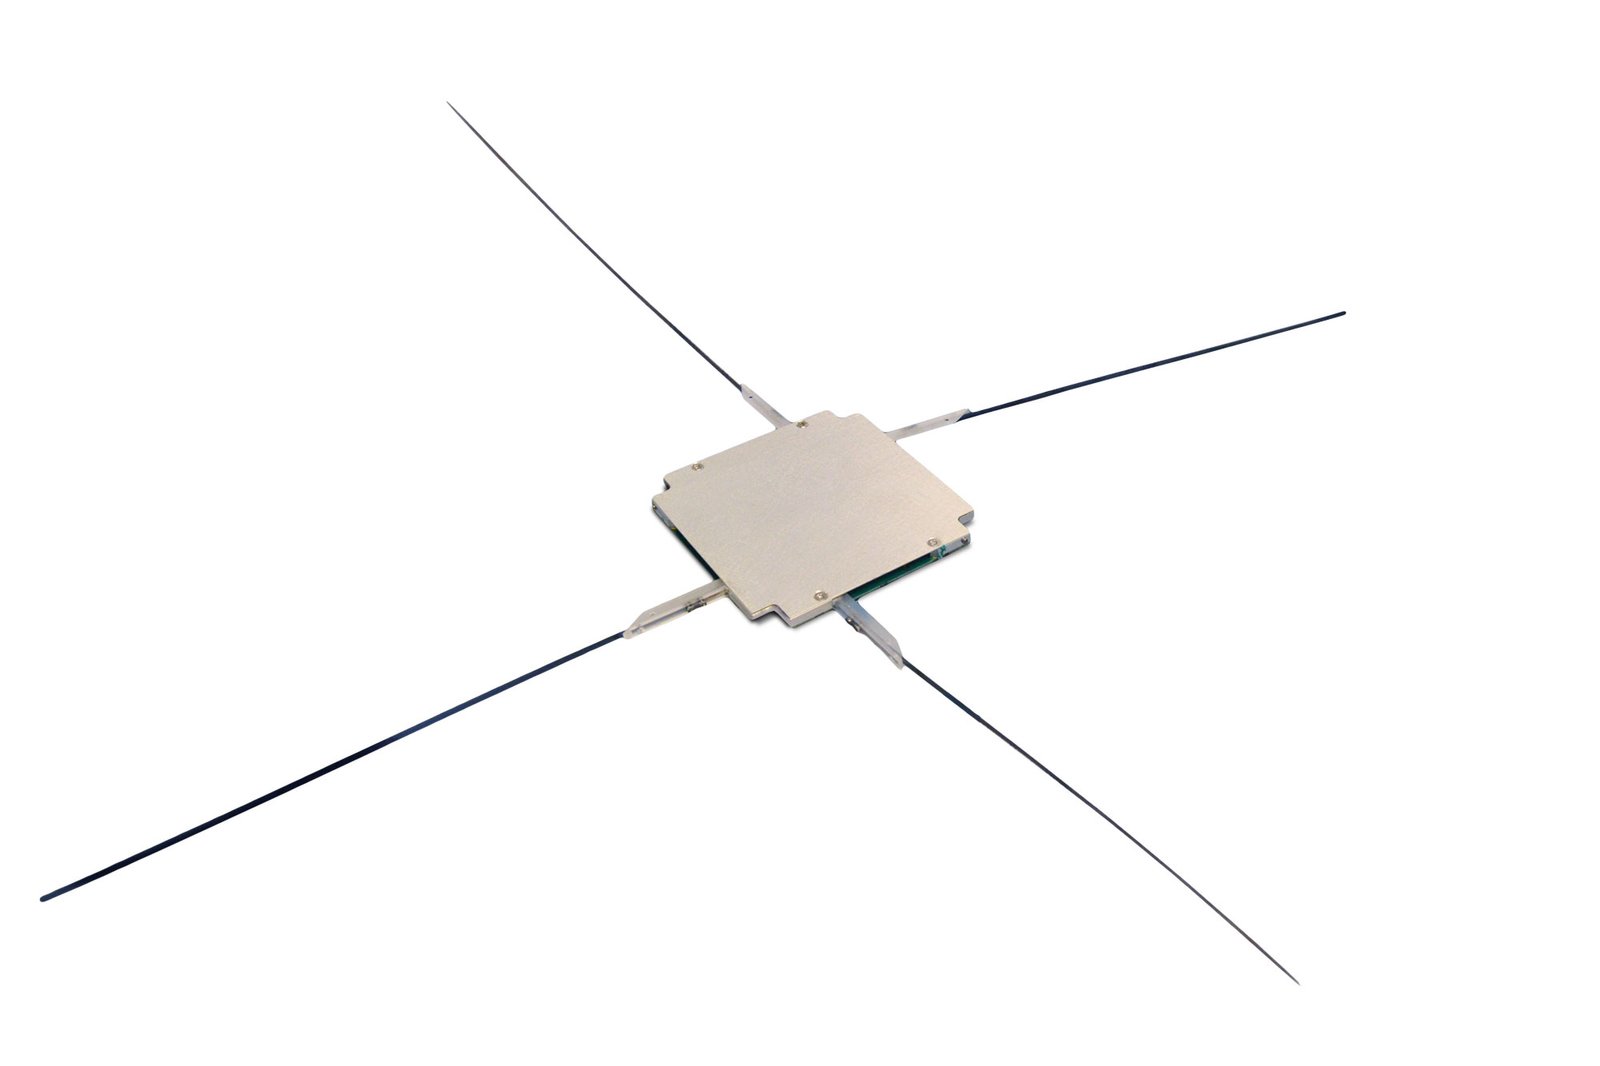 3U Cubesat Antenna